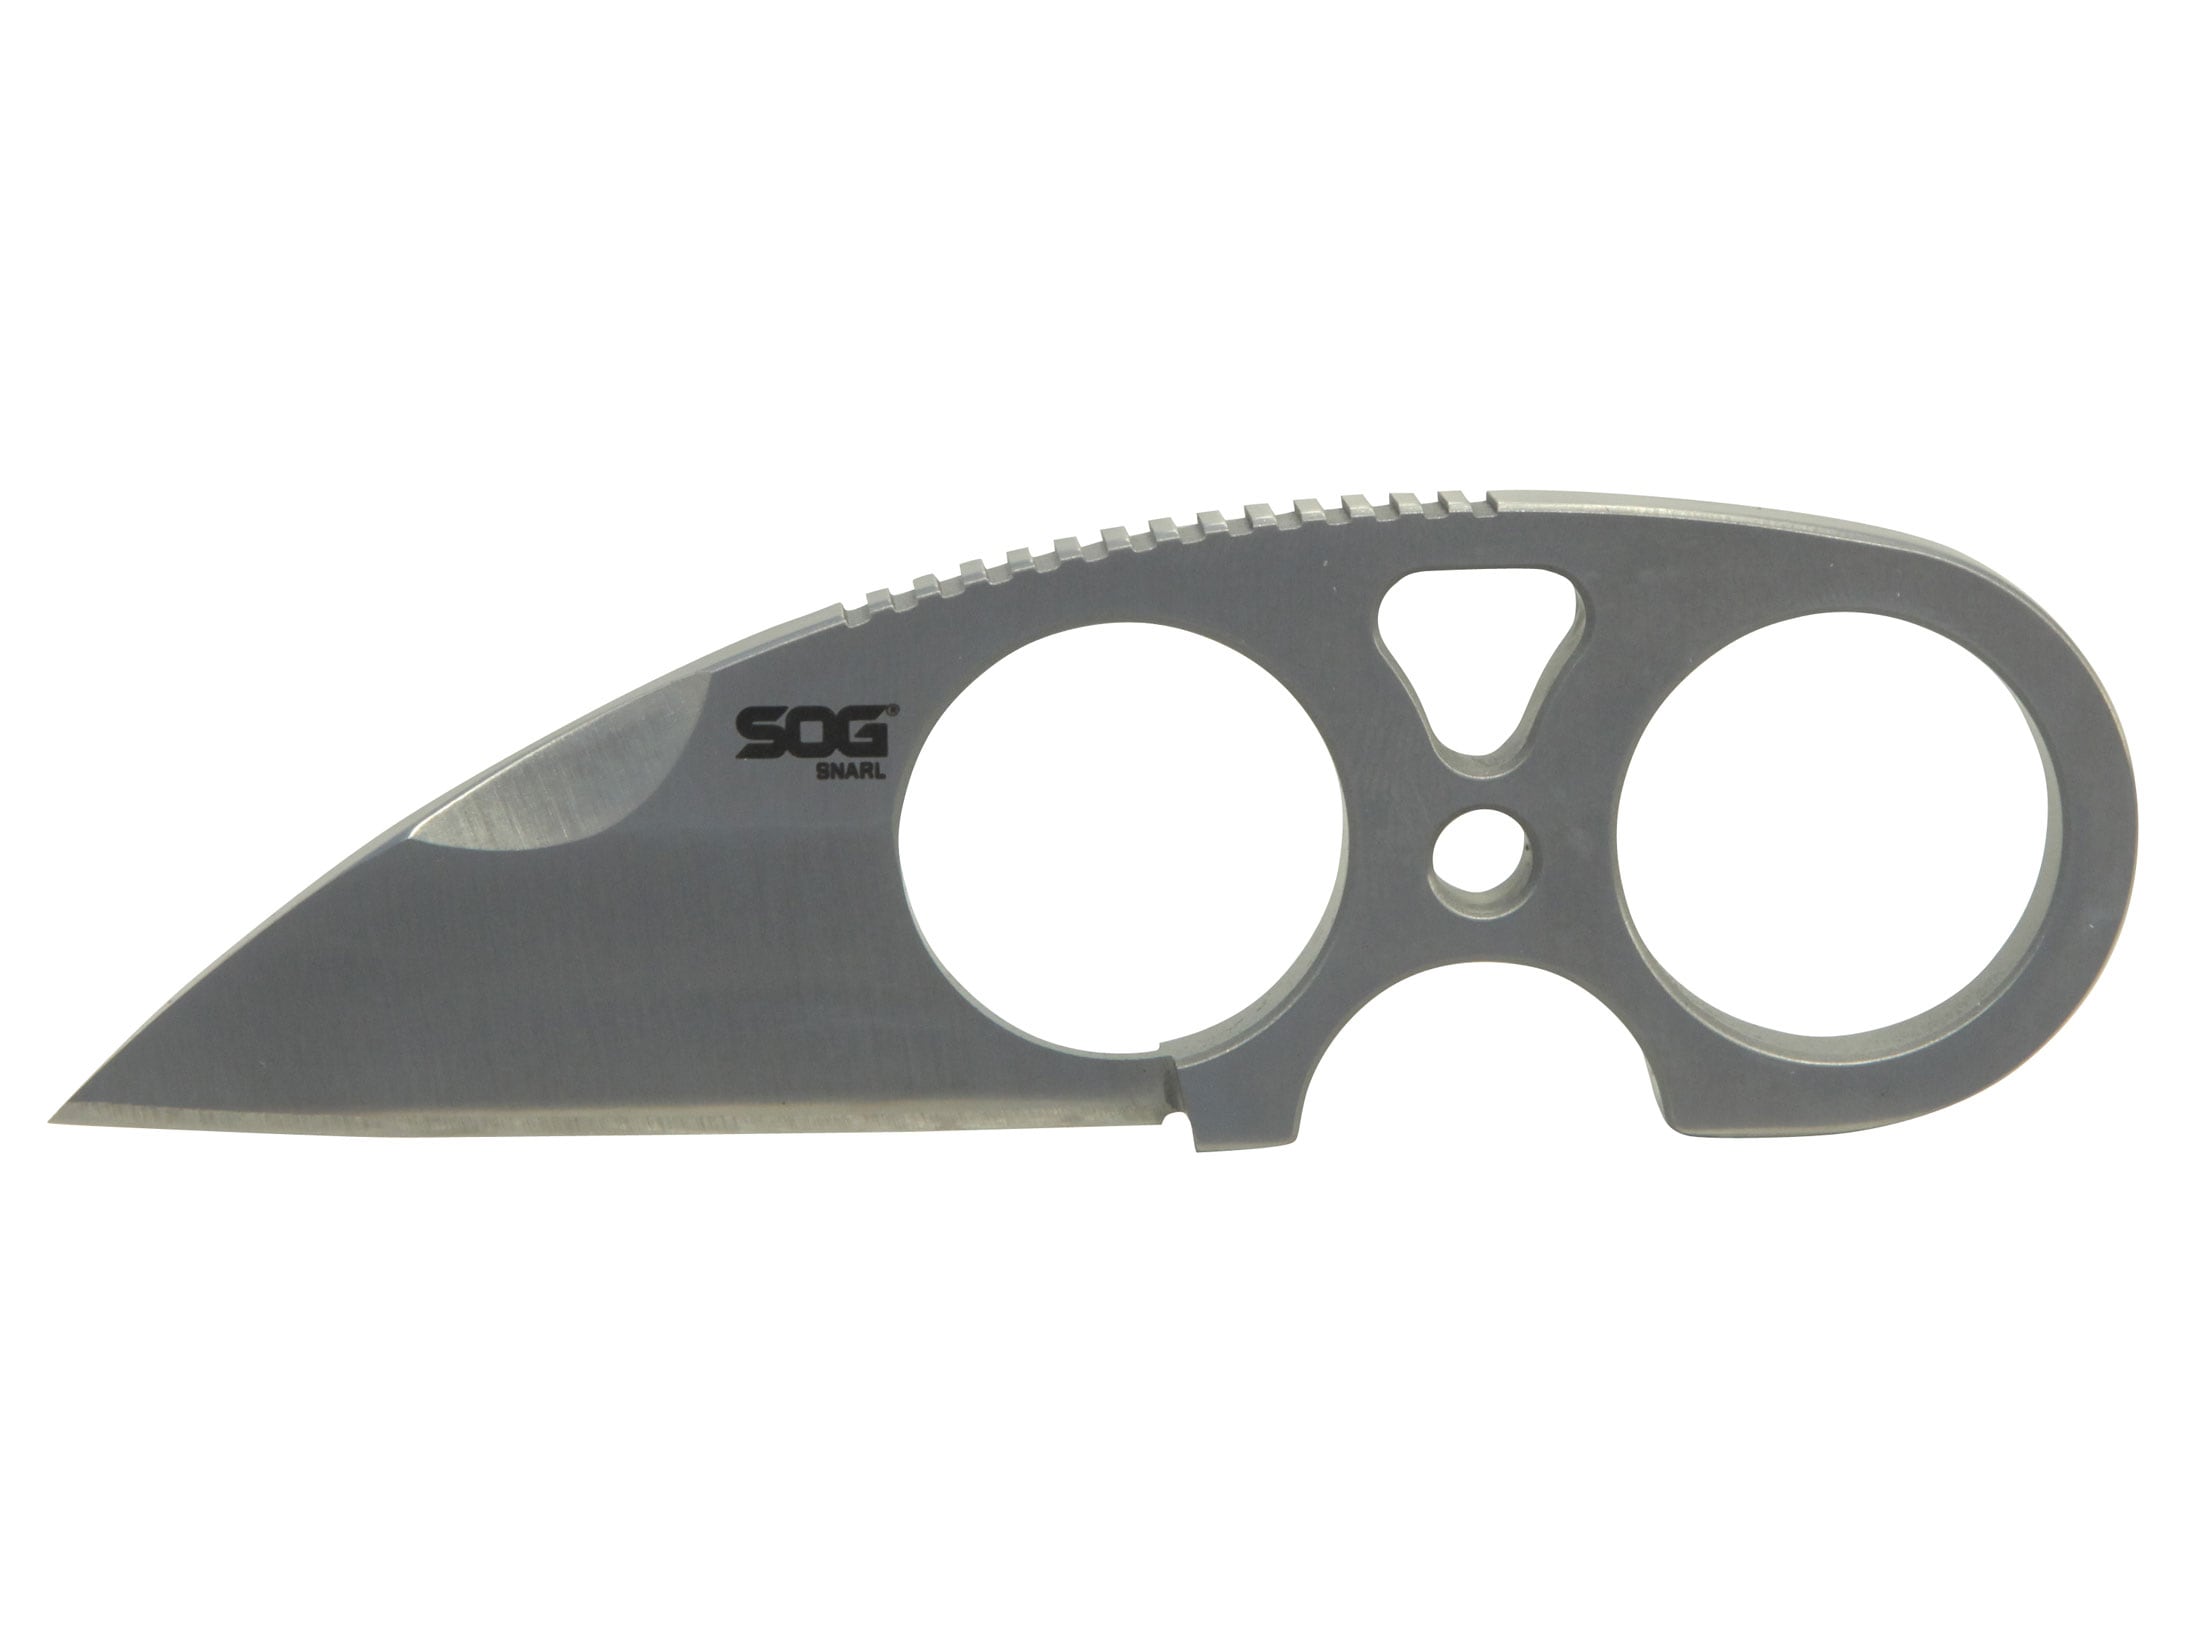 SOG Snarl Fixed Blade Neck Knife 2.3″ Sheepsfoot 9Cr19MoV Stainless Steel Blade Skeleton Handle For Sale